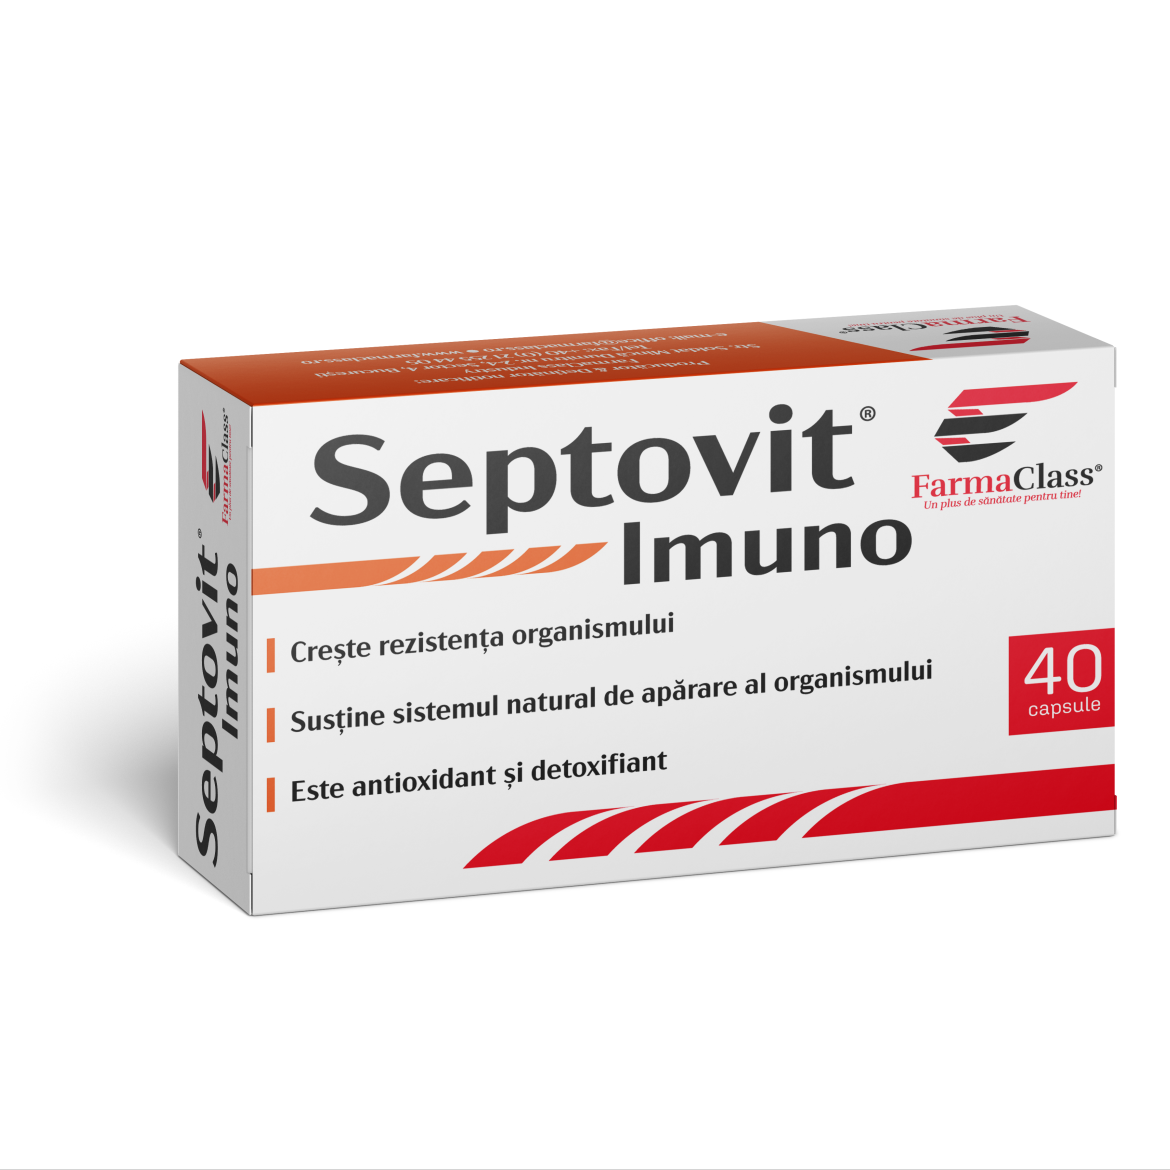 Septovit Imuno, 40 capsule, Farma Class